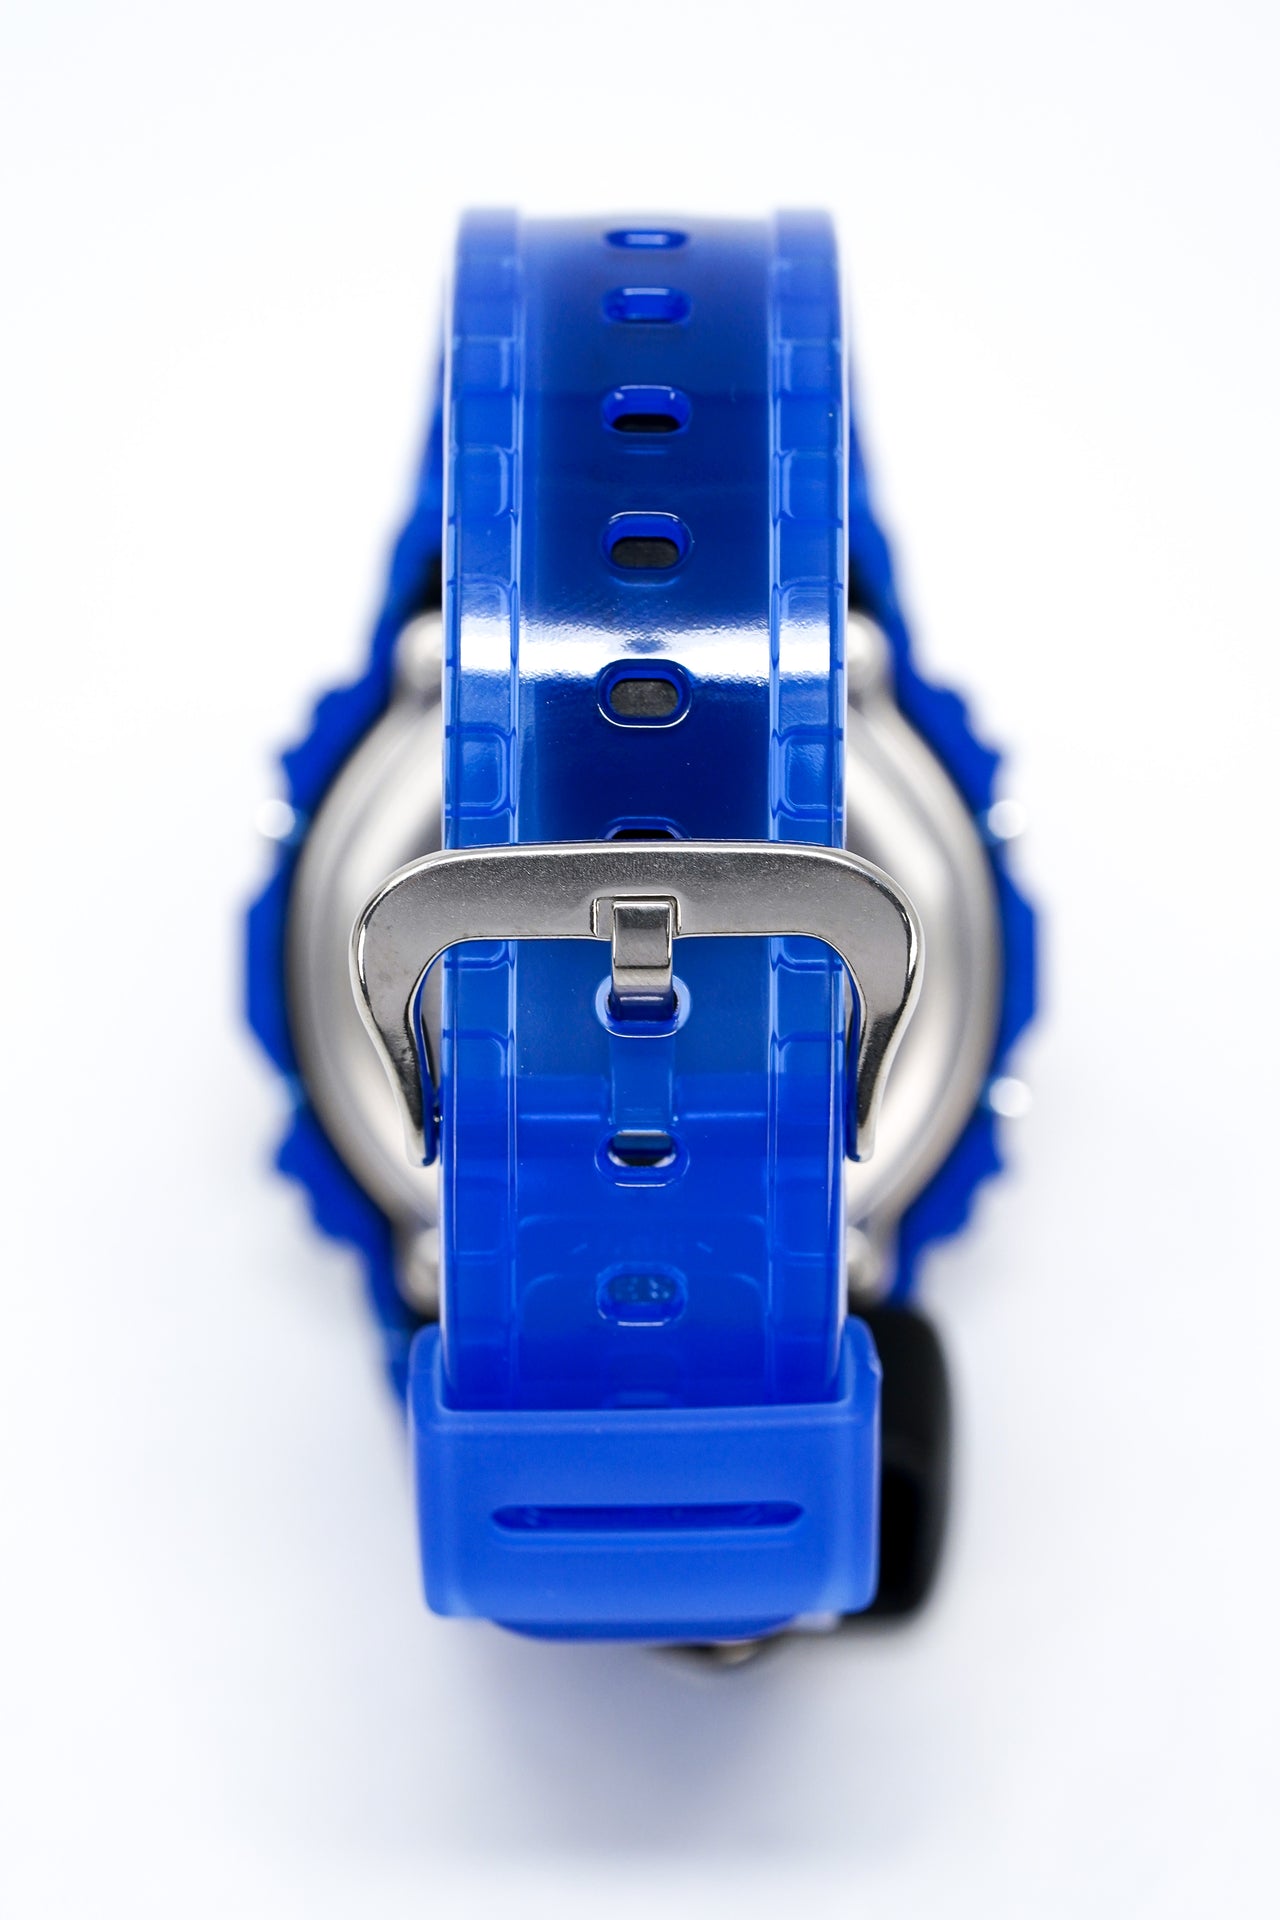 Casio G-Shock Men's Watch Translucent Blue DW-5600SB-2DR